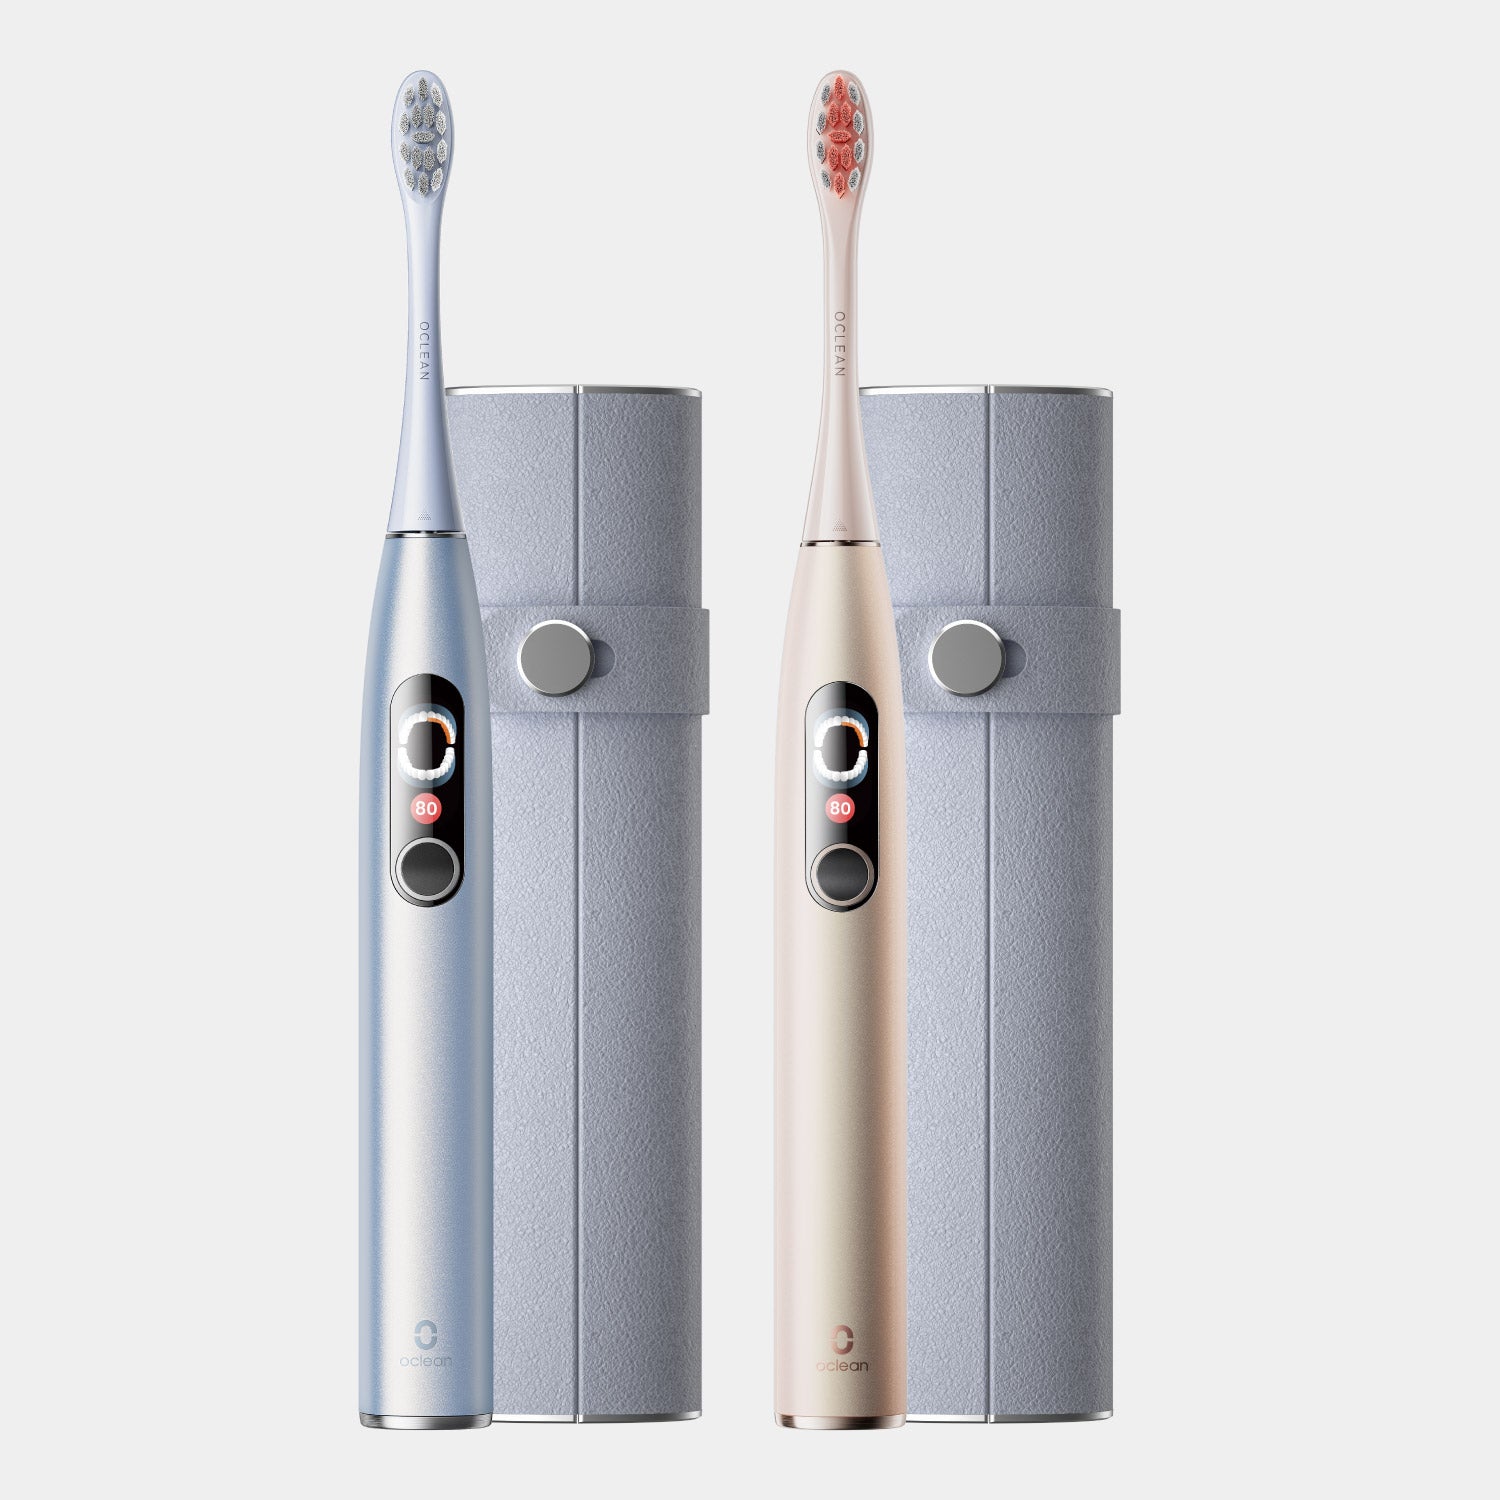 Oclean X Pro Digital Premium Set Sonic Electric Toothbrush-Toothbrushes-Oclean US Store